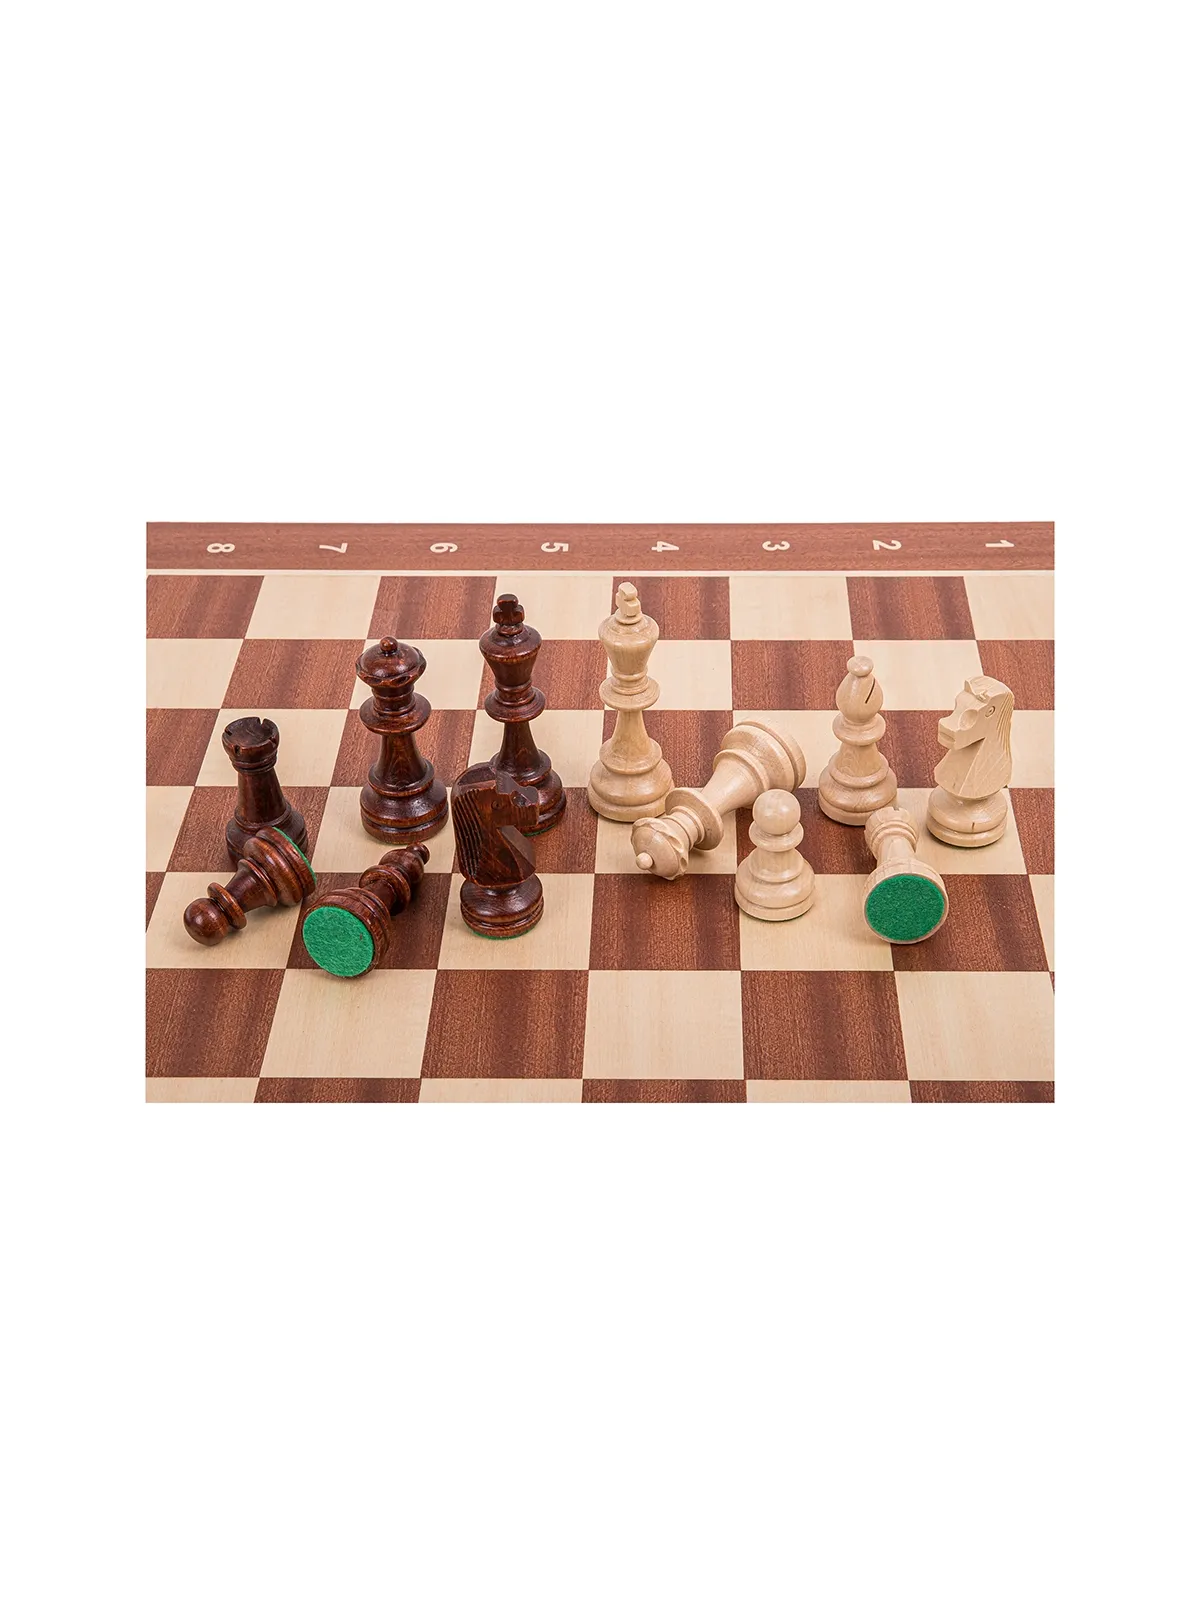 Profi Schach Set Nr 5 - Mahagoni